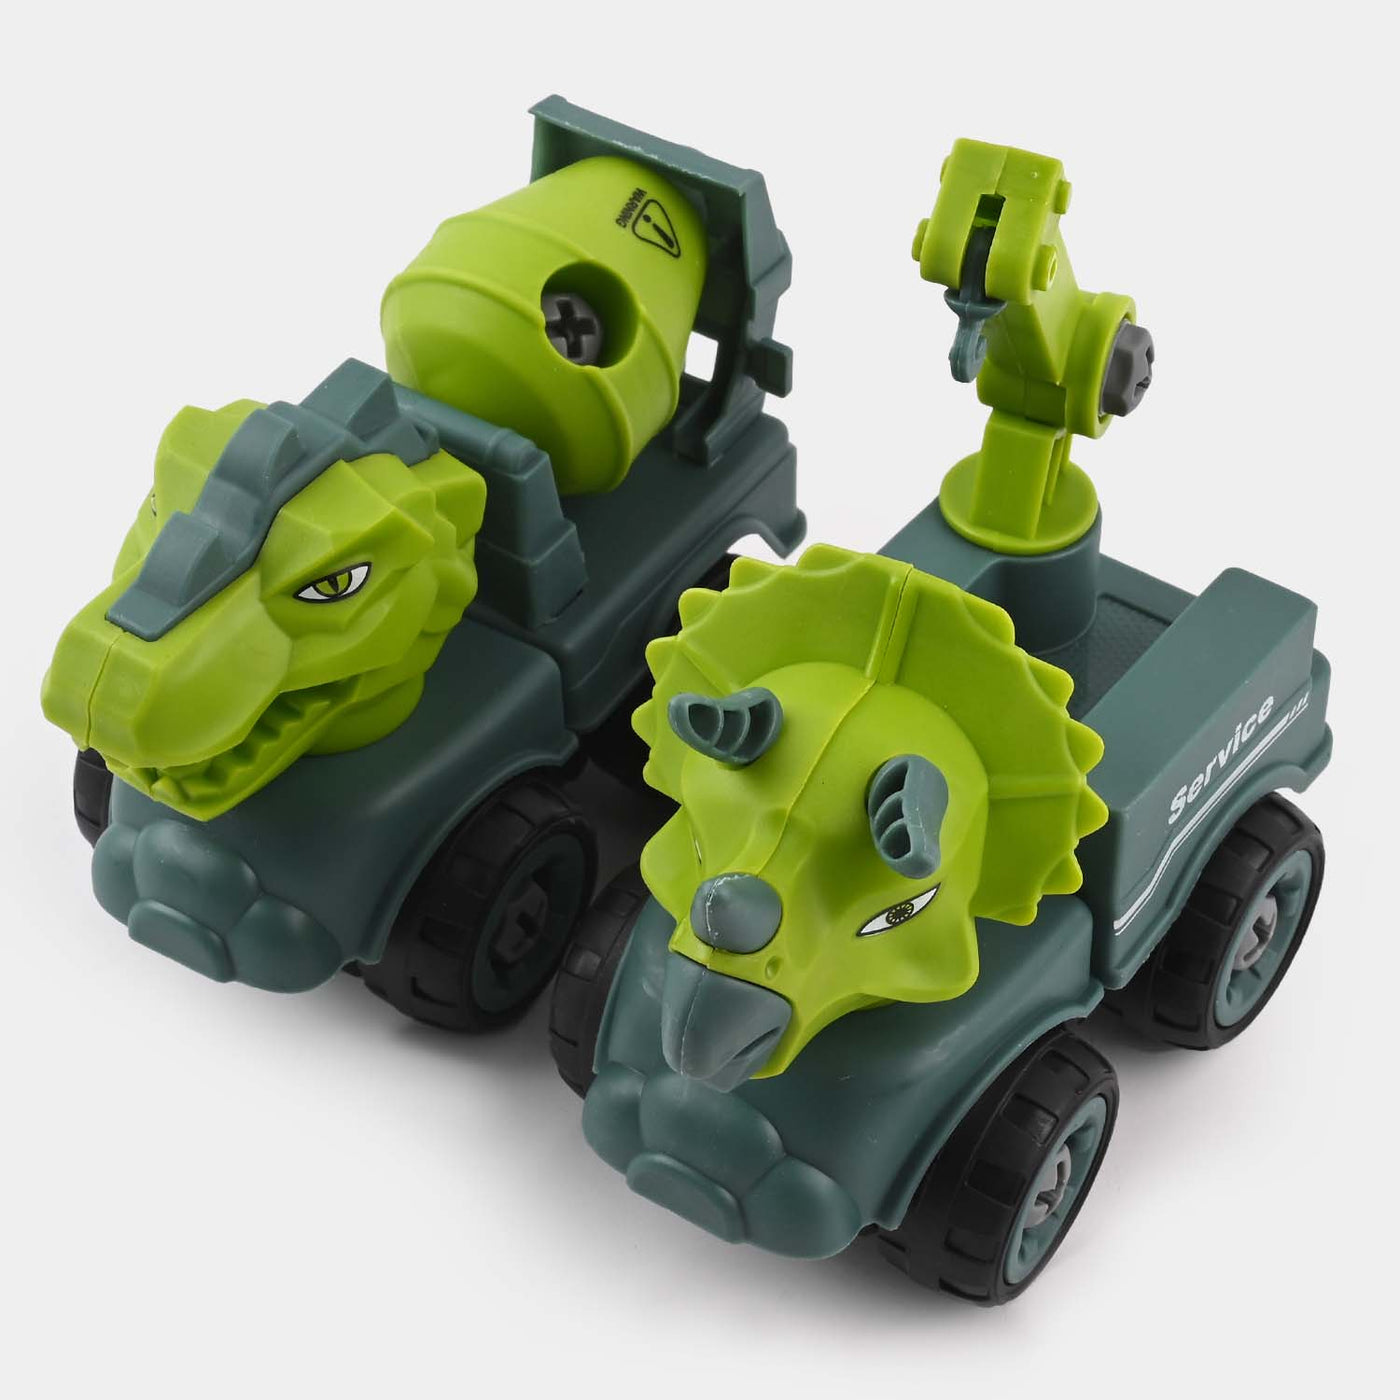 Dinosaur Construction Vehicle For Kids